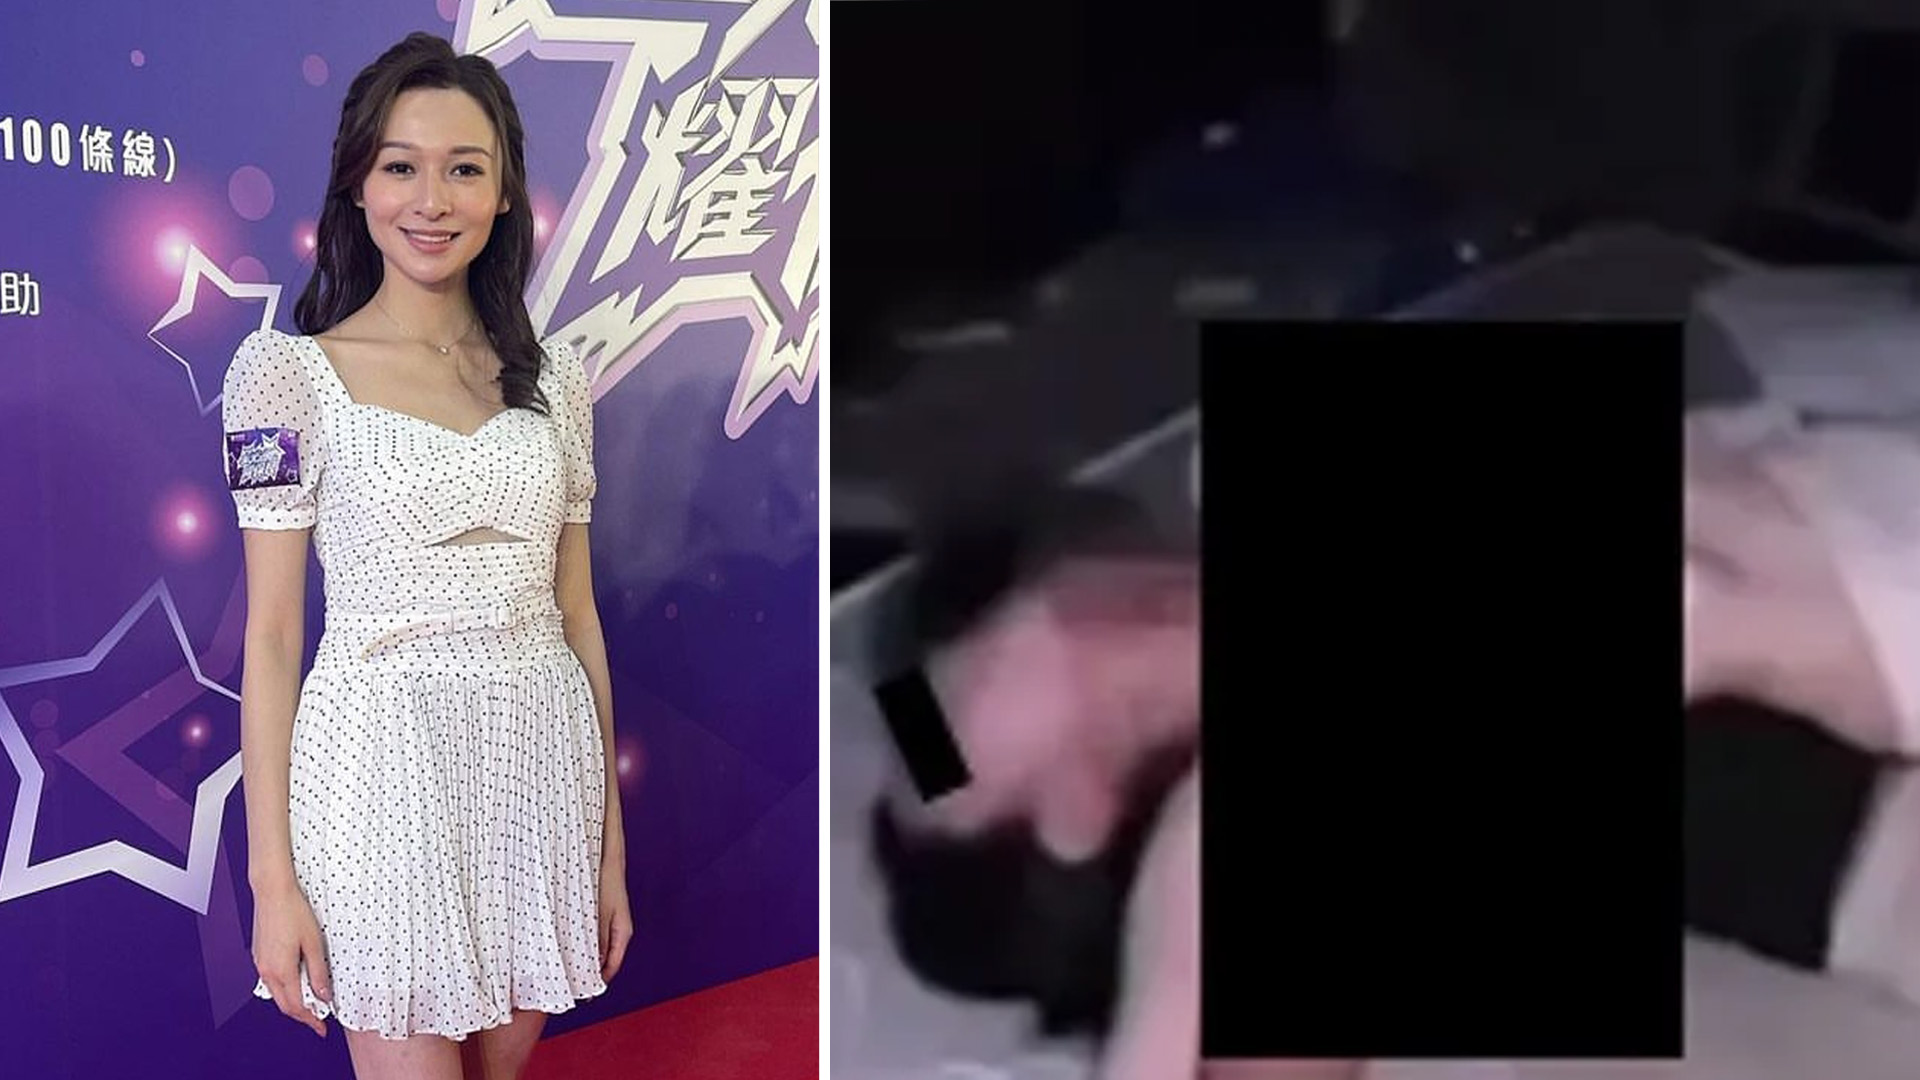 darlene pritchard share hong kong celebrity sex photos